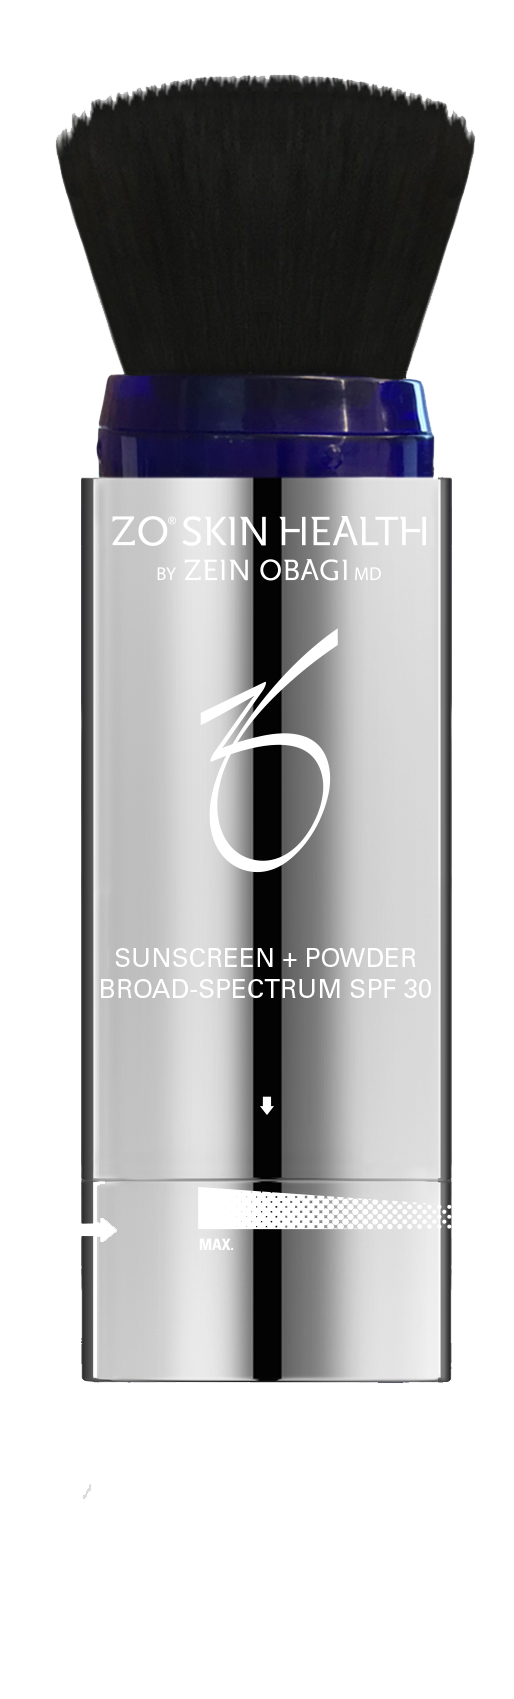 ZO Skin Health Sunscreen + Powder Broad-Spectrum SPF 30 - LIGHT